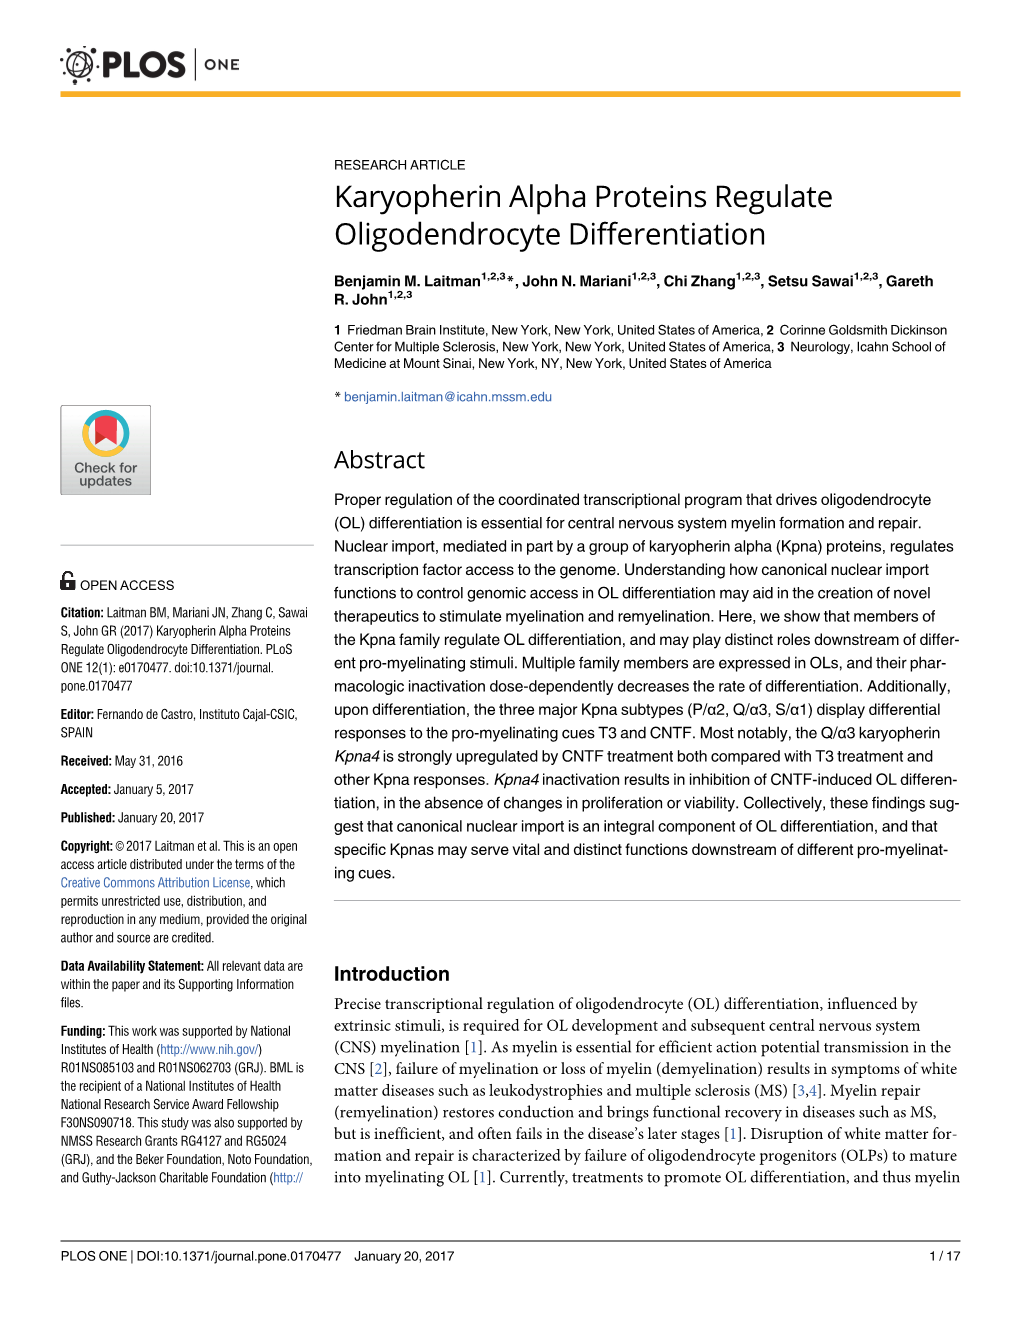 Karyopherin Alpha Proteins Regulate Oligodendrocyte Differentiation